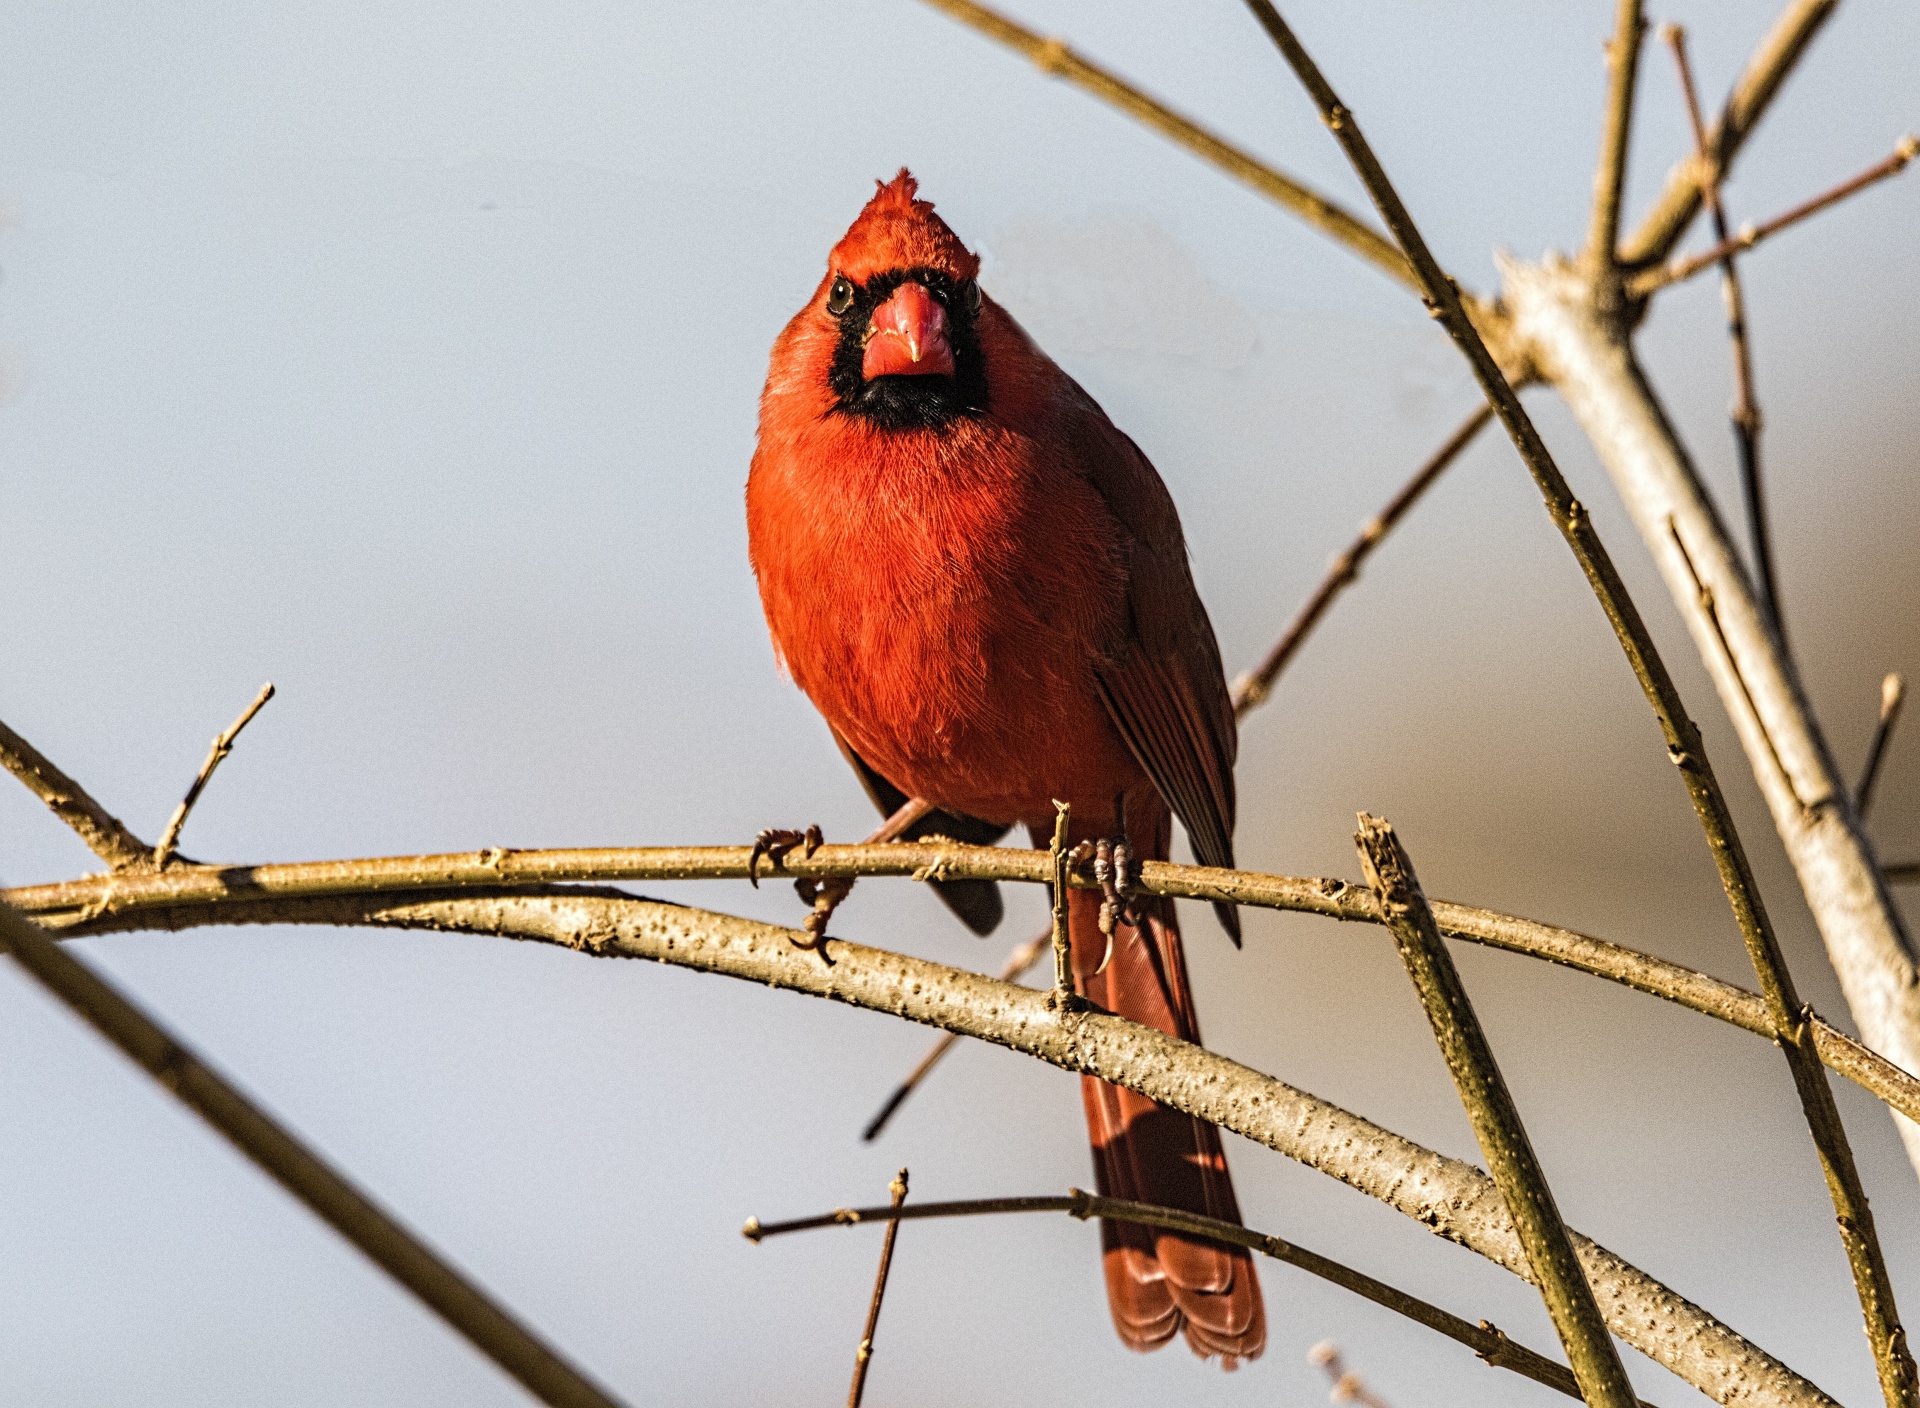 A male cardinal perched on a tree limb